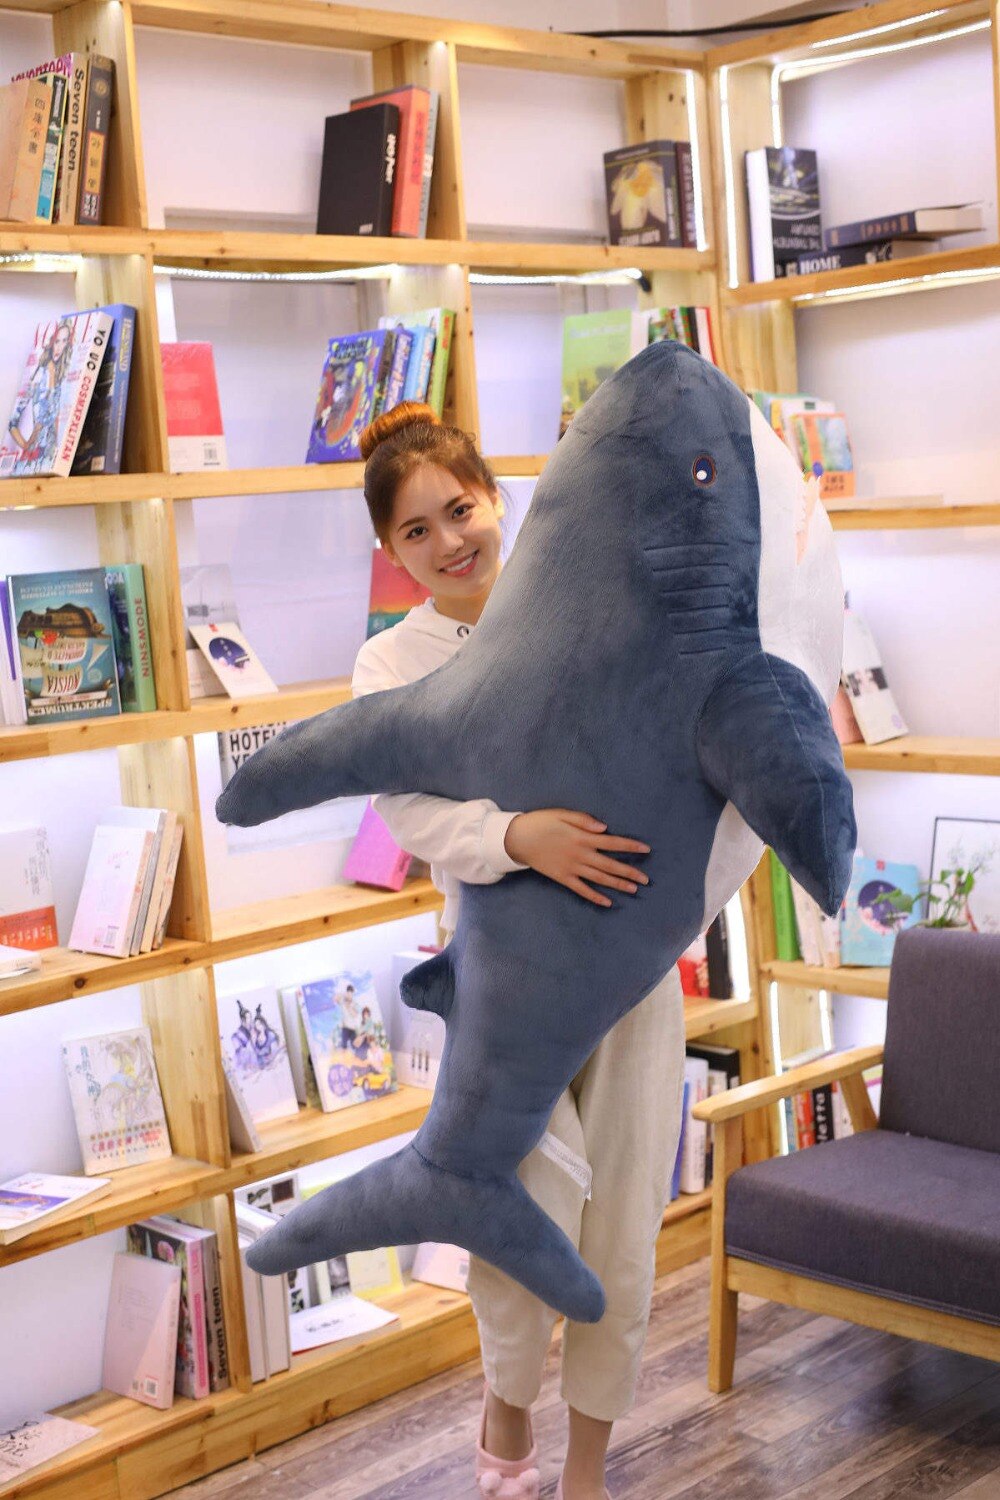 1pc 80/100cm Simulation Giant Size Bite Shark Plush Toys Real Like Creative Animal Shark Pillows Stuffed Soft Toys Children Gift